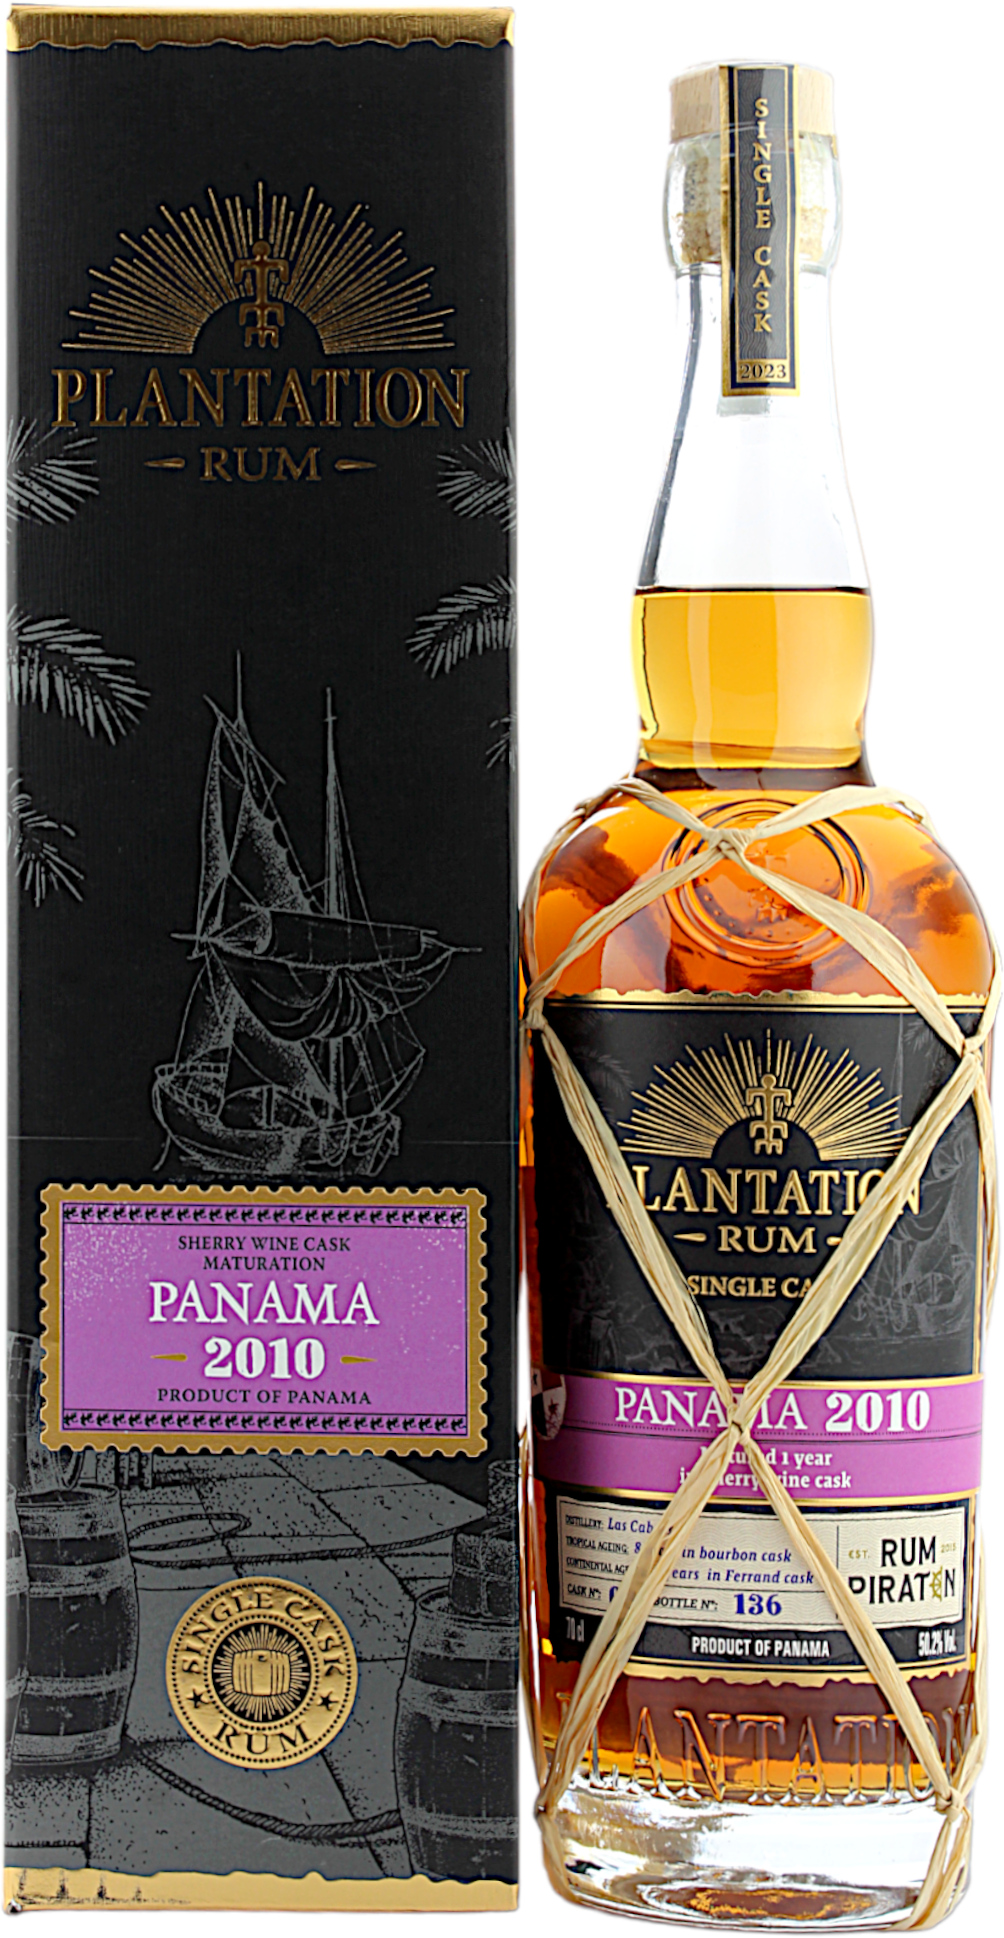 Plantation Rum Panama 12 Jahre 2010/2023 Rumpiraten Sherry Single Cask Finish 50.2% 0,7l